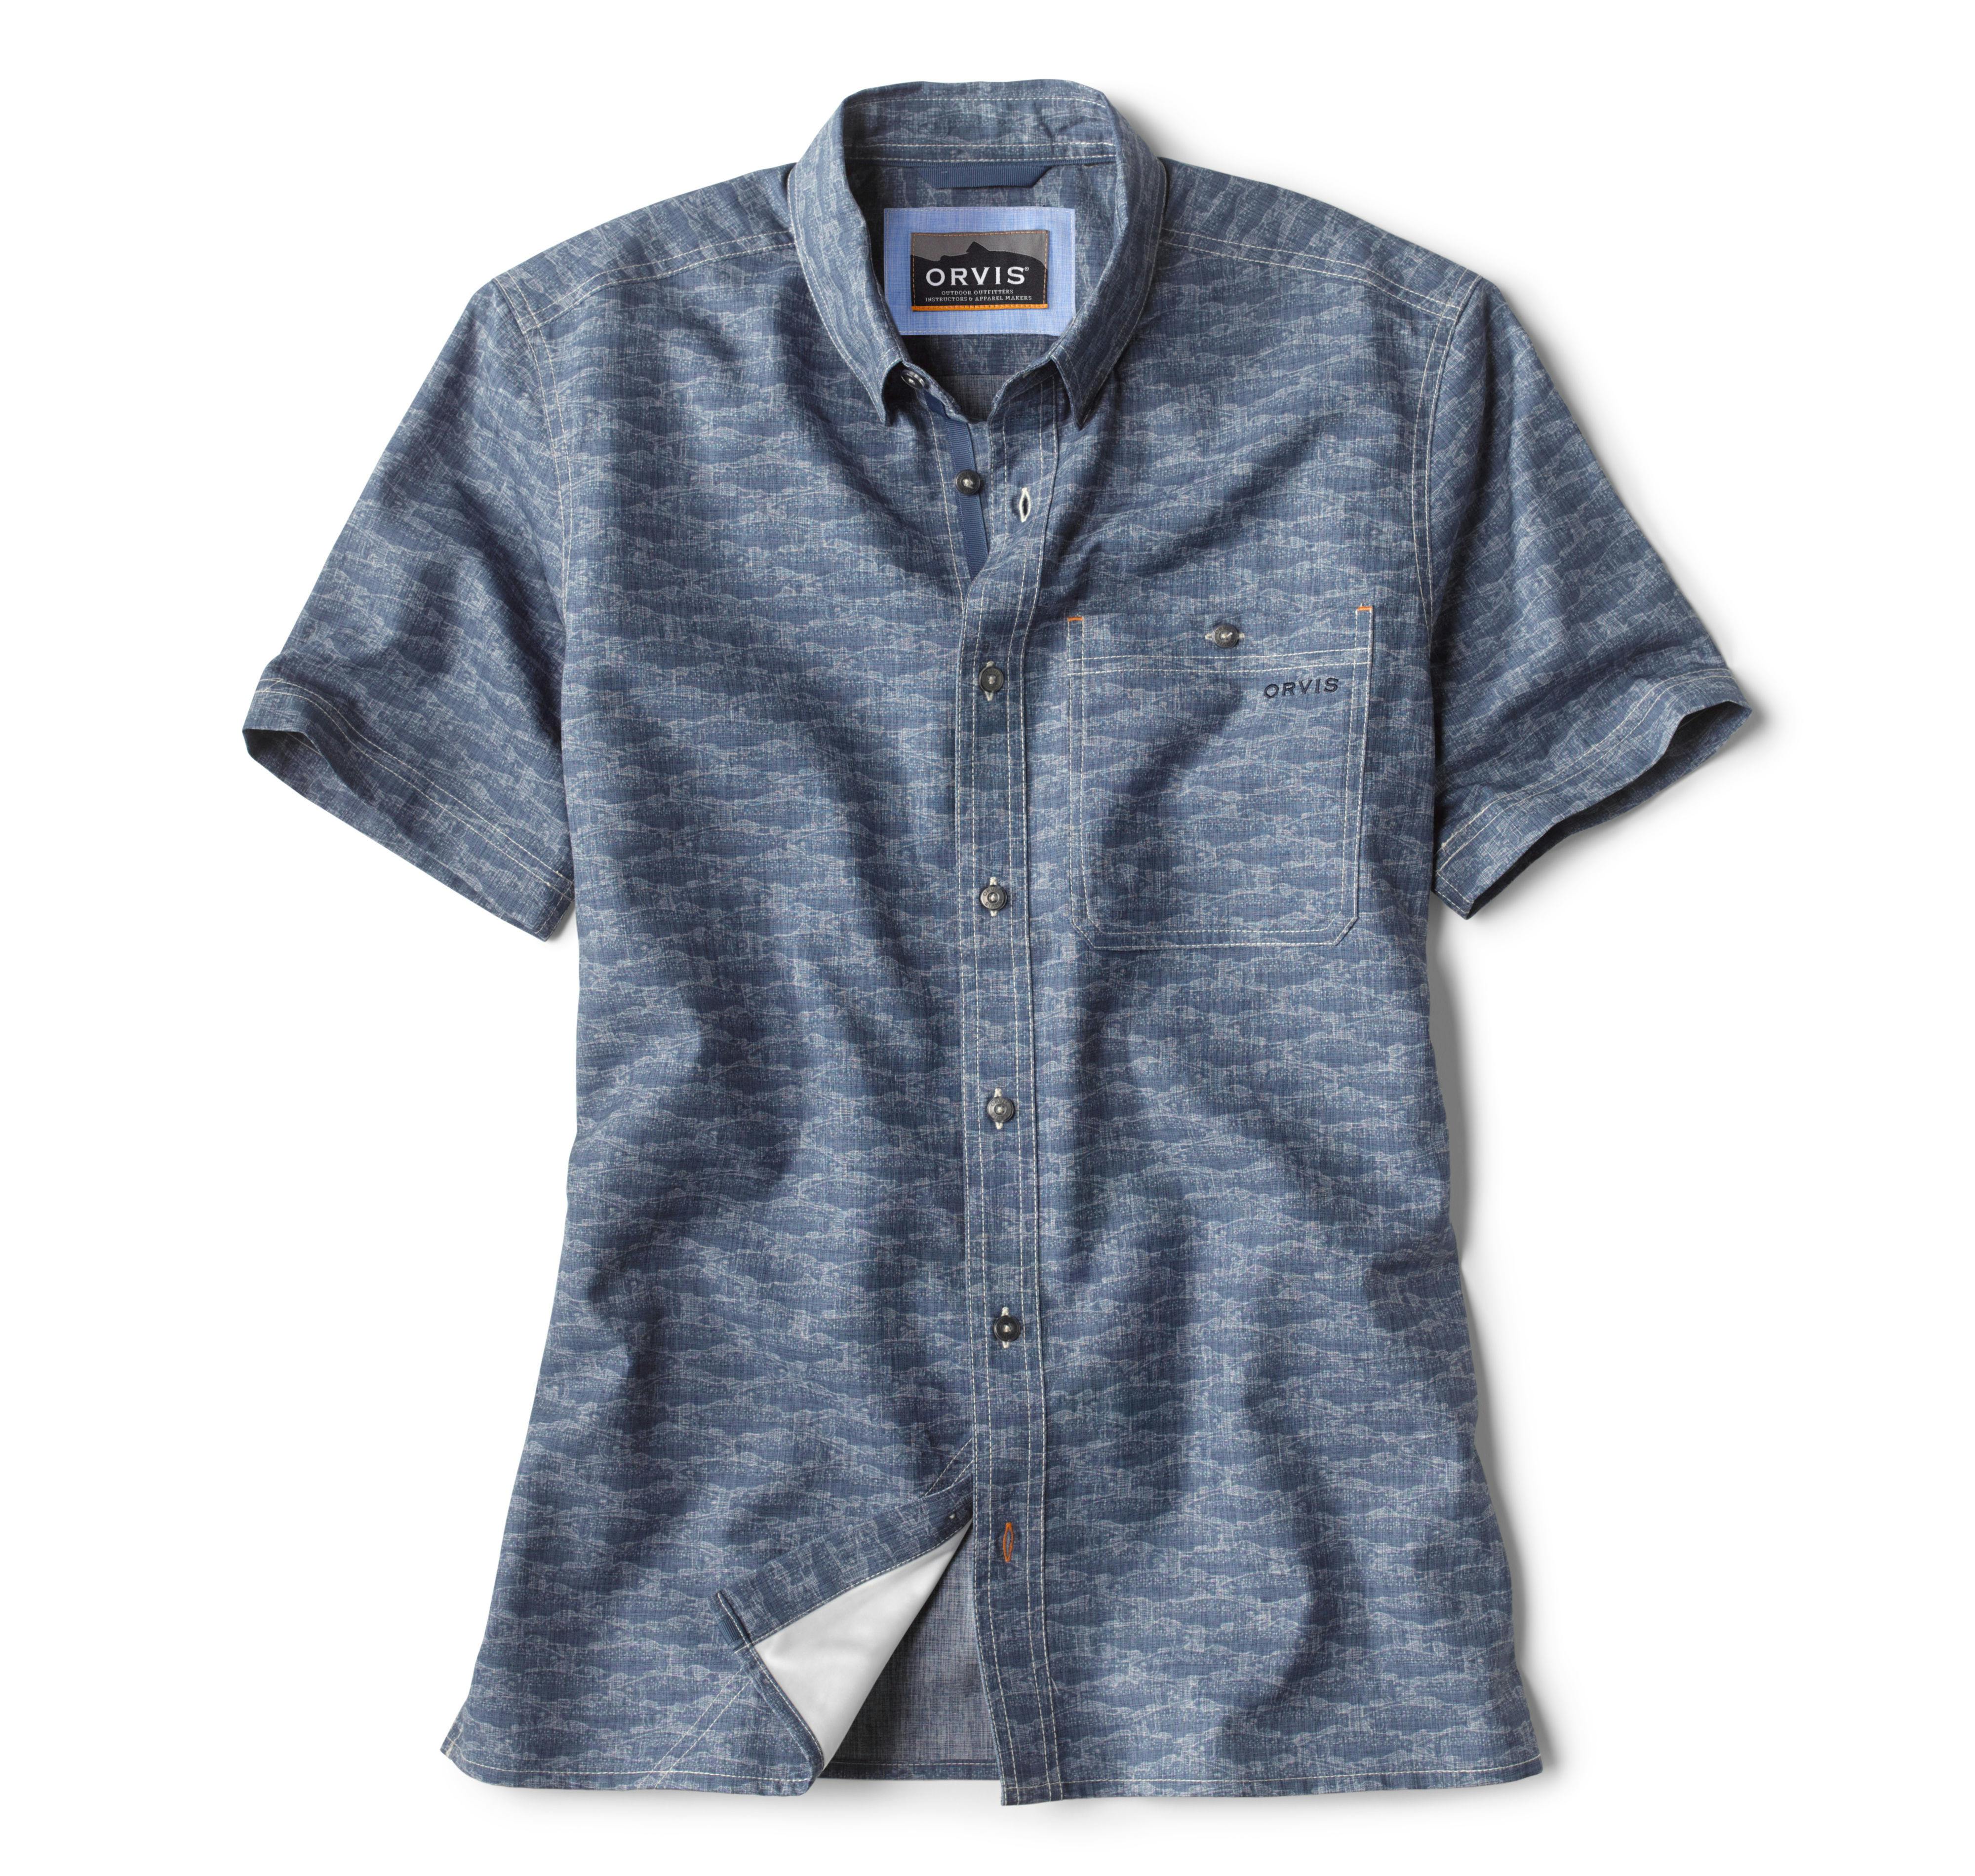 Orvis Men's Printed Tech Chambray Short-Sleeved Shirt